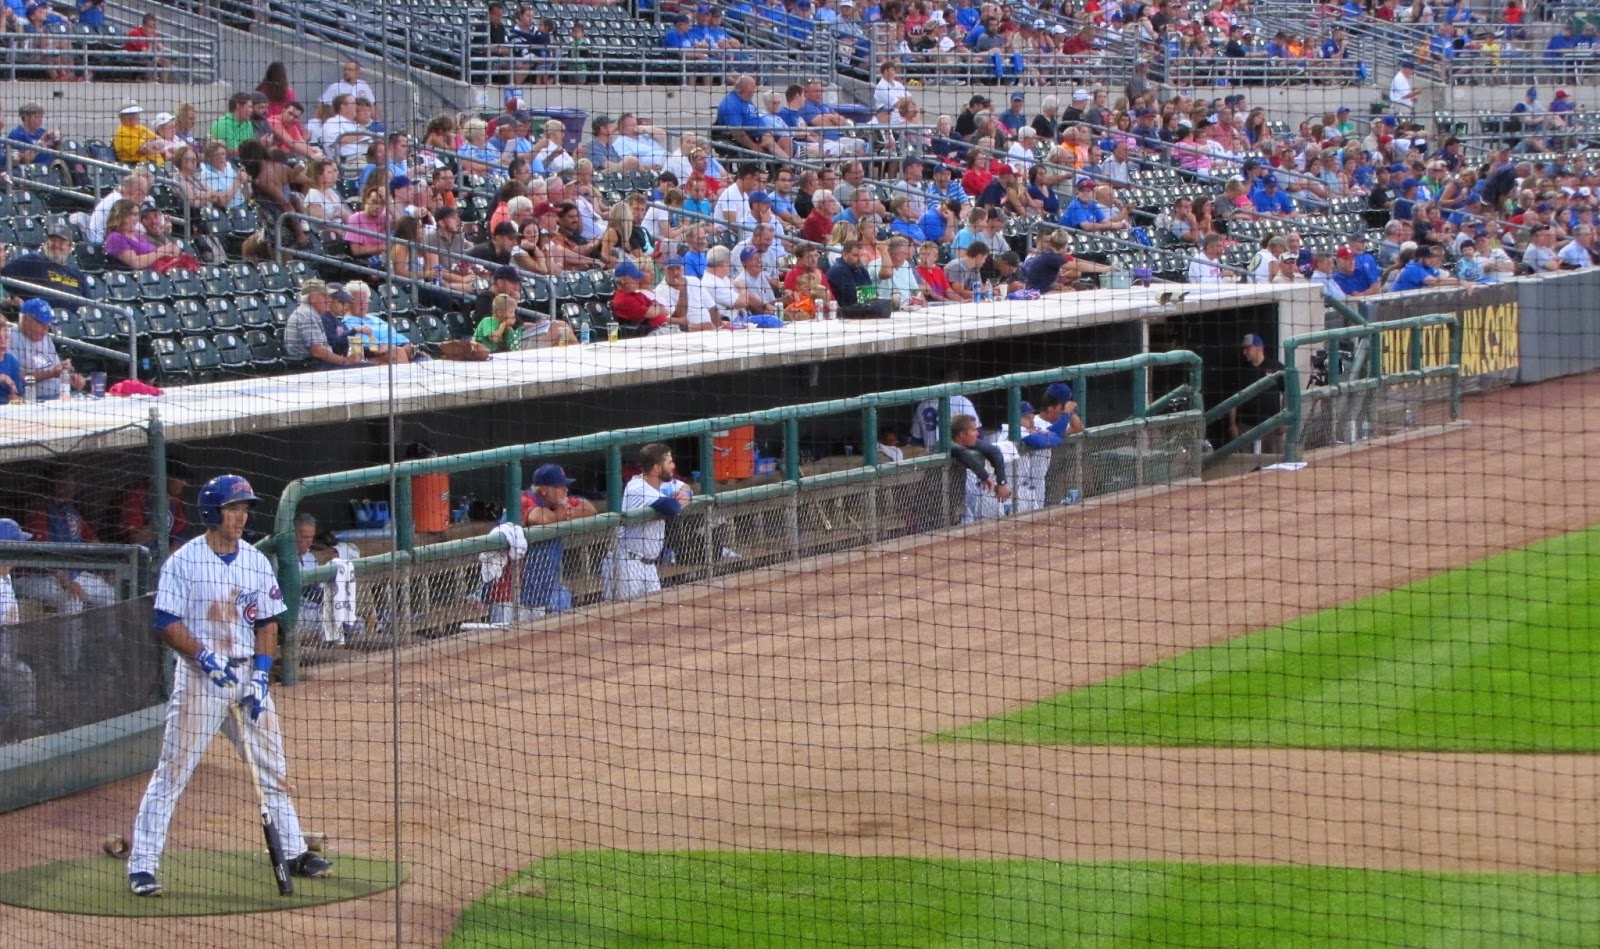 SJ Obstructed Views - Iowa Cubs - Principal Park (Ep.14) 